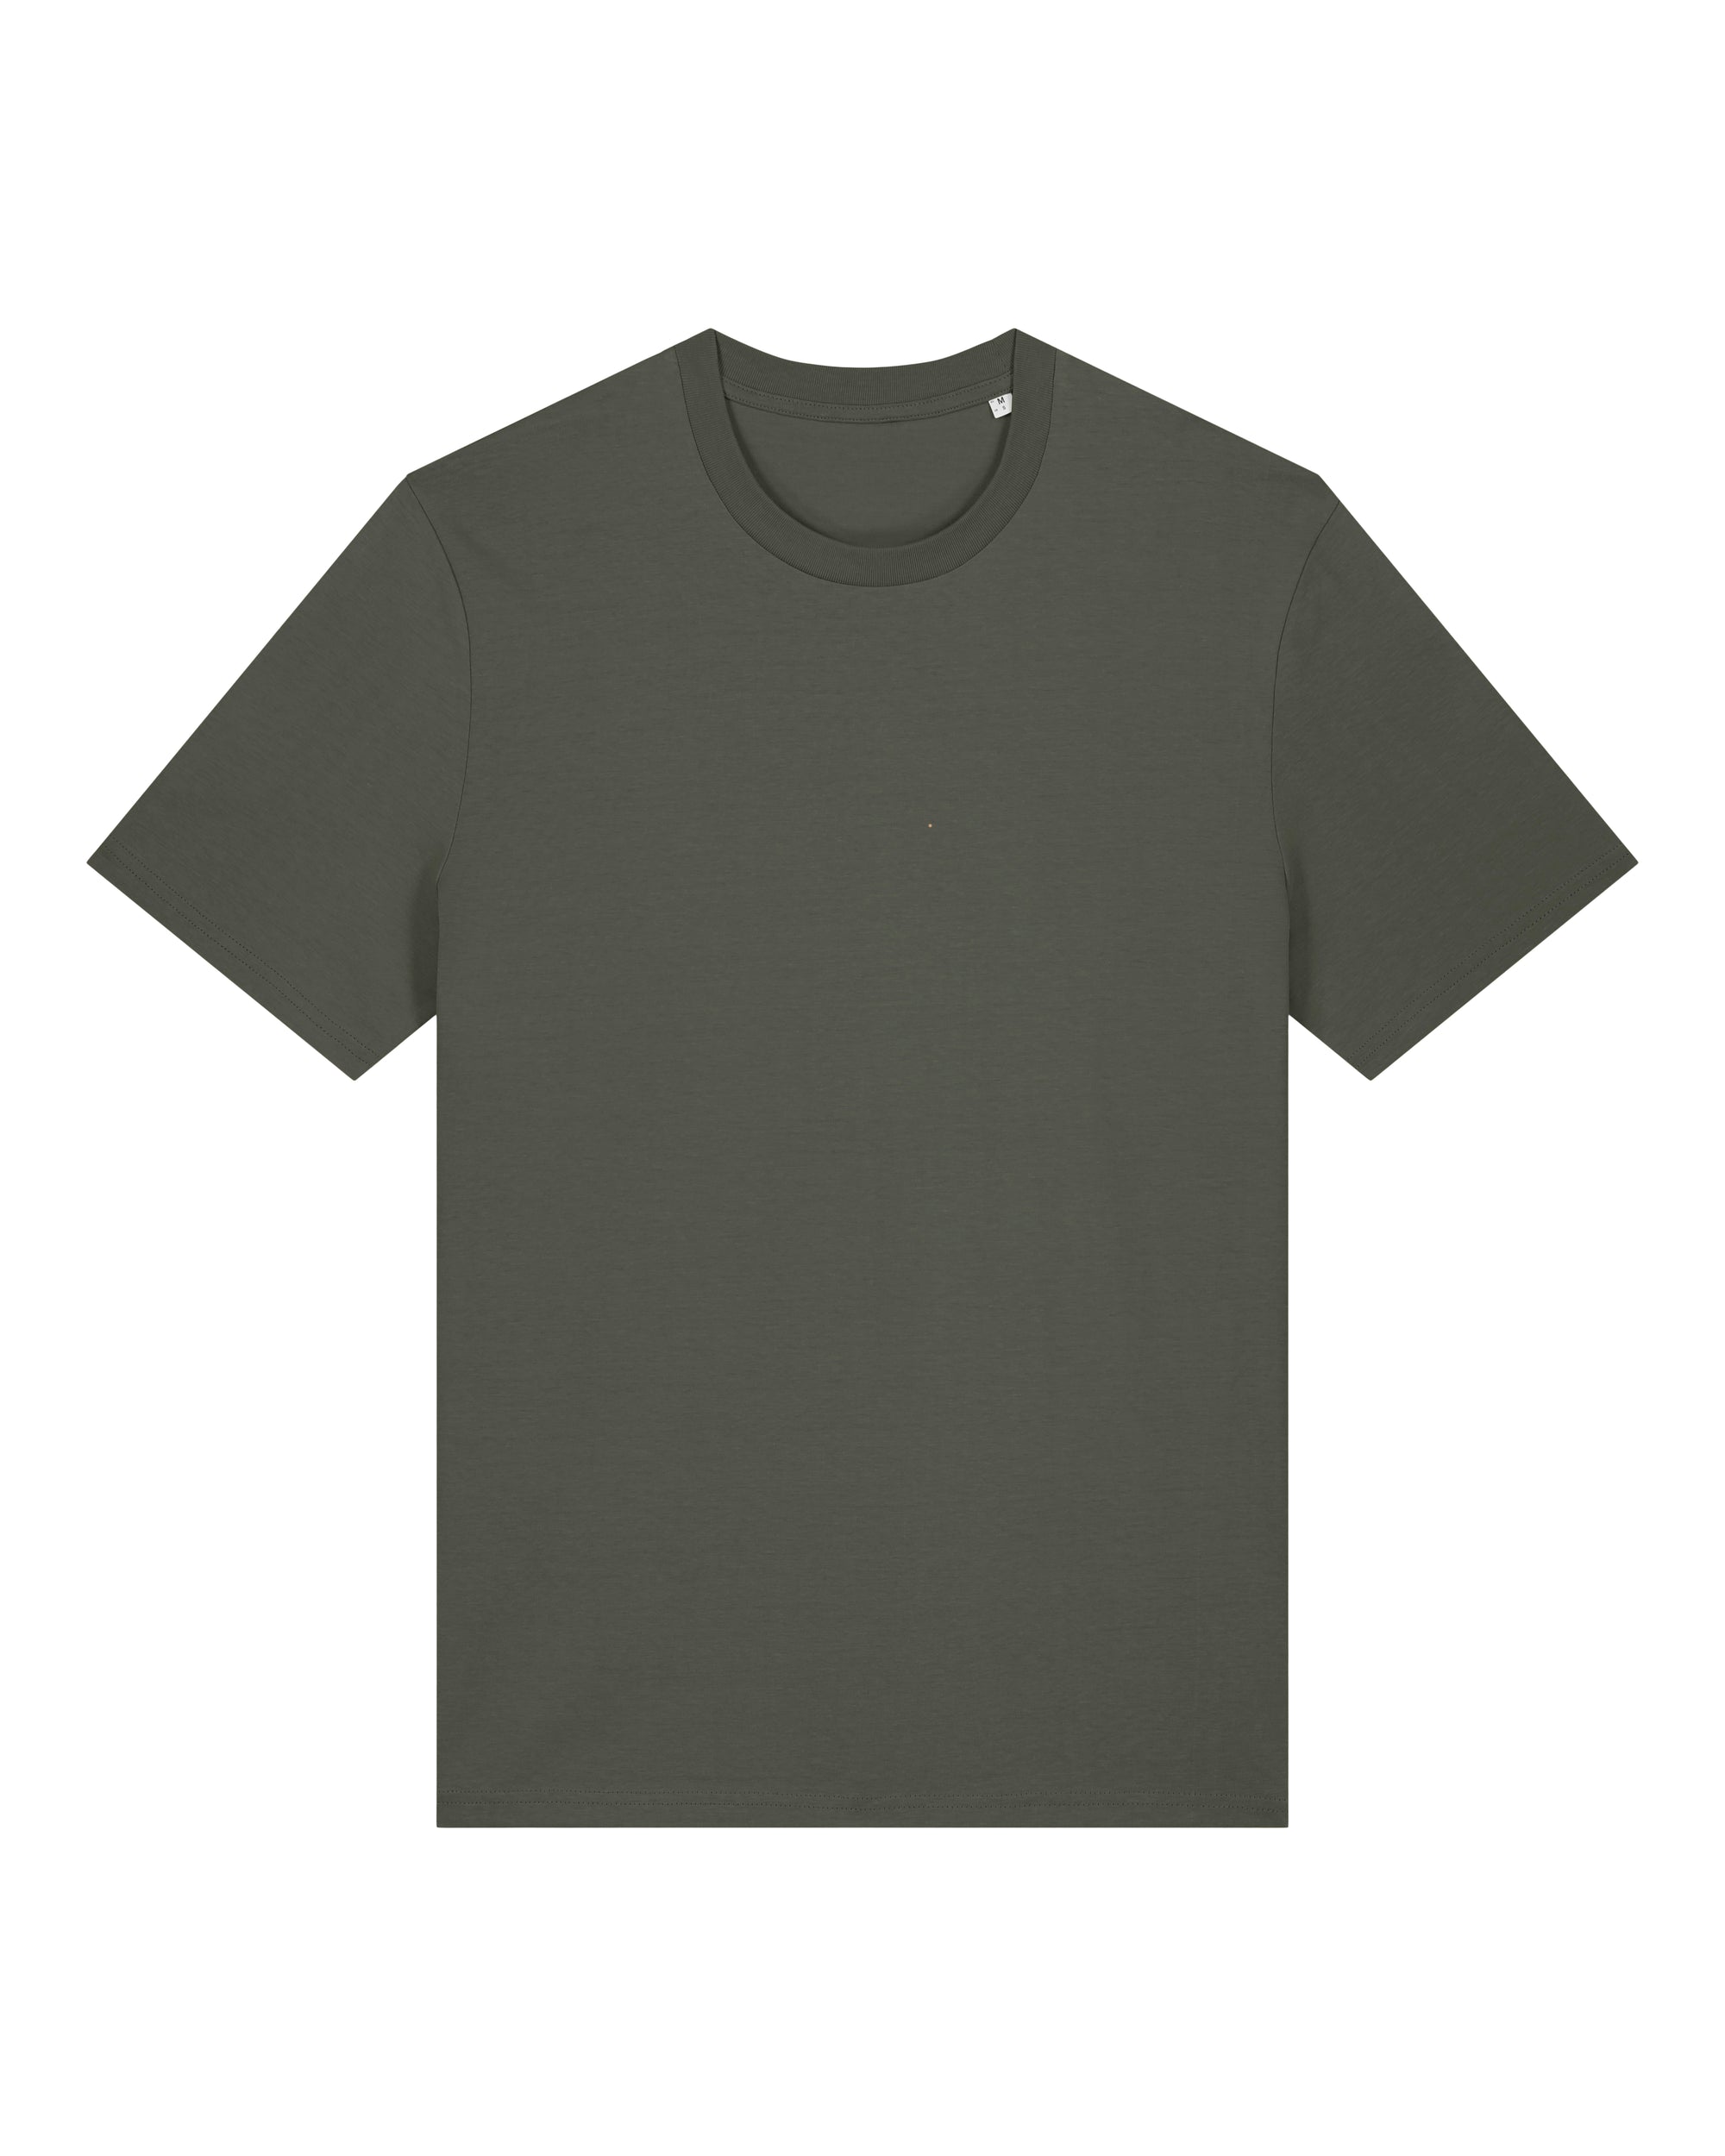 Camiseta Unisex · 100% Algodón · Manga Corta · 185 GSM · No encoge ni deforma · Personalizable · K3032IC